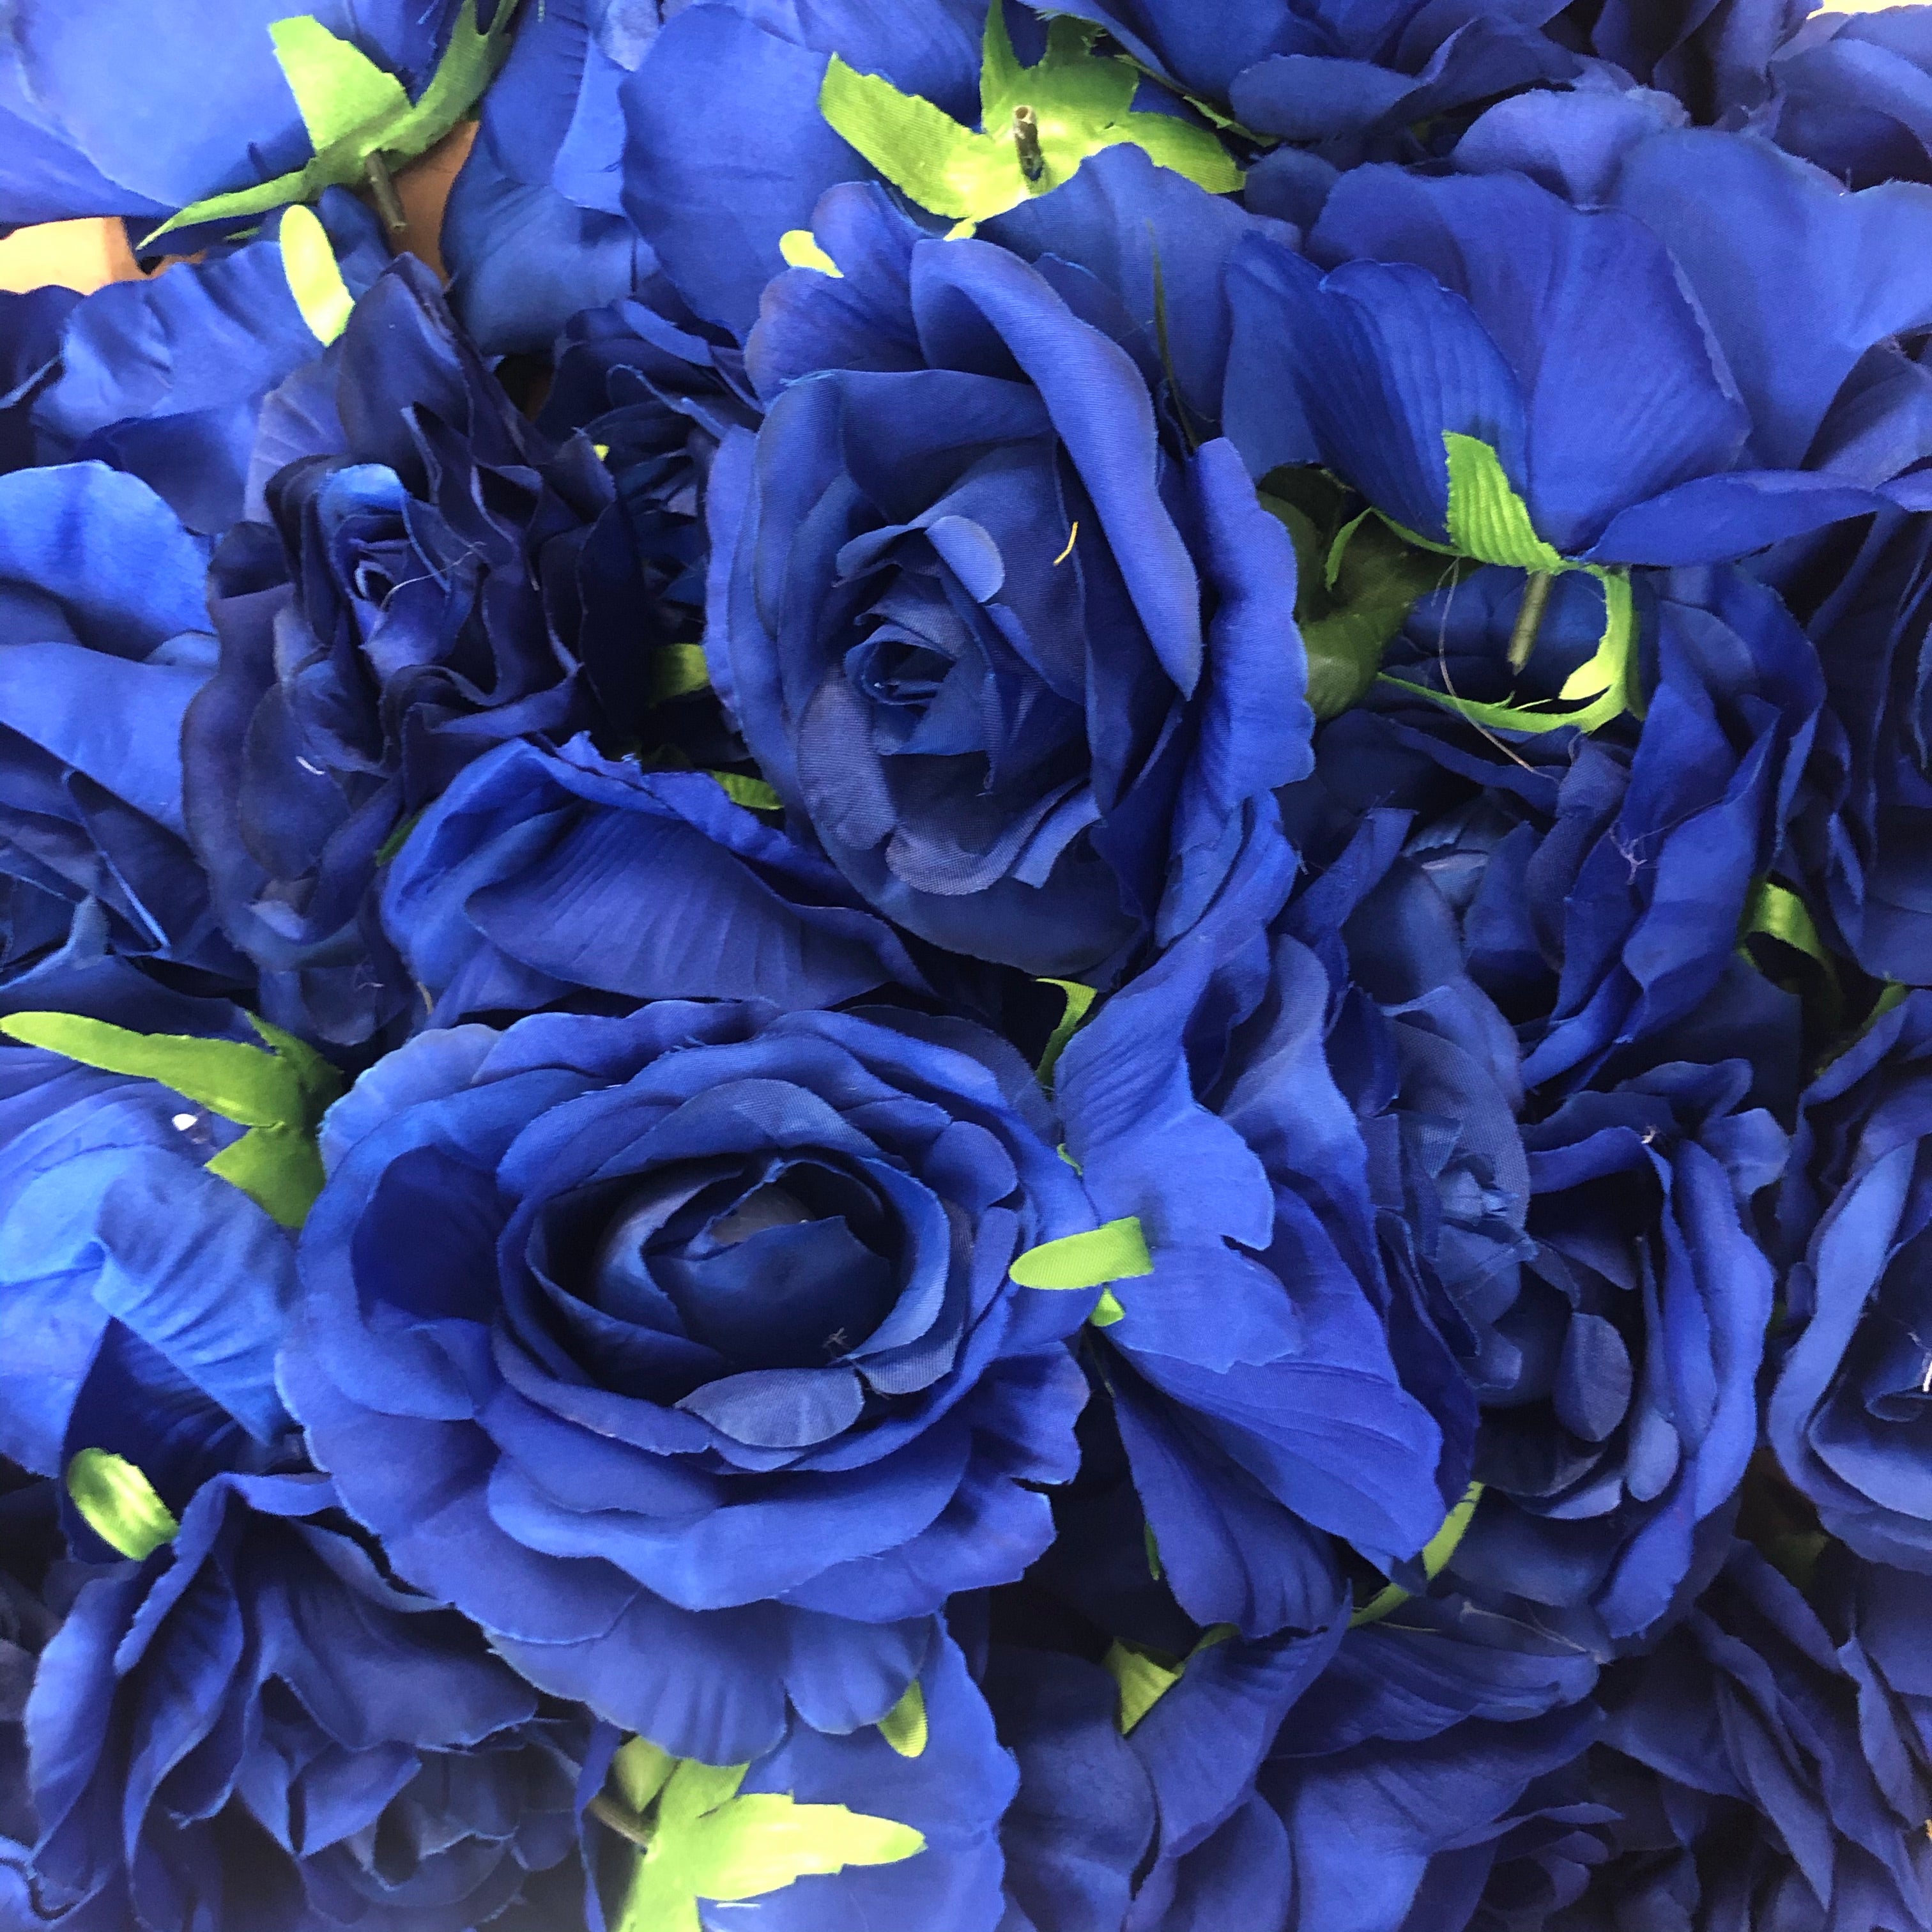 Artificial Silk Flower Head - Royal Blue Rose Style 117 - 1pc